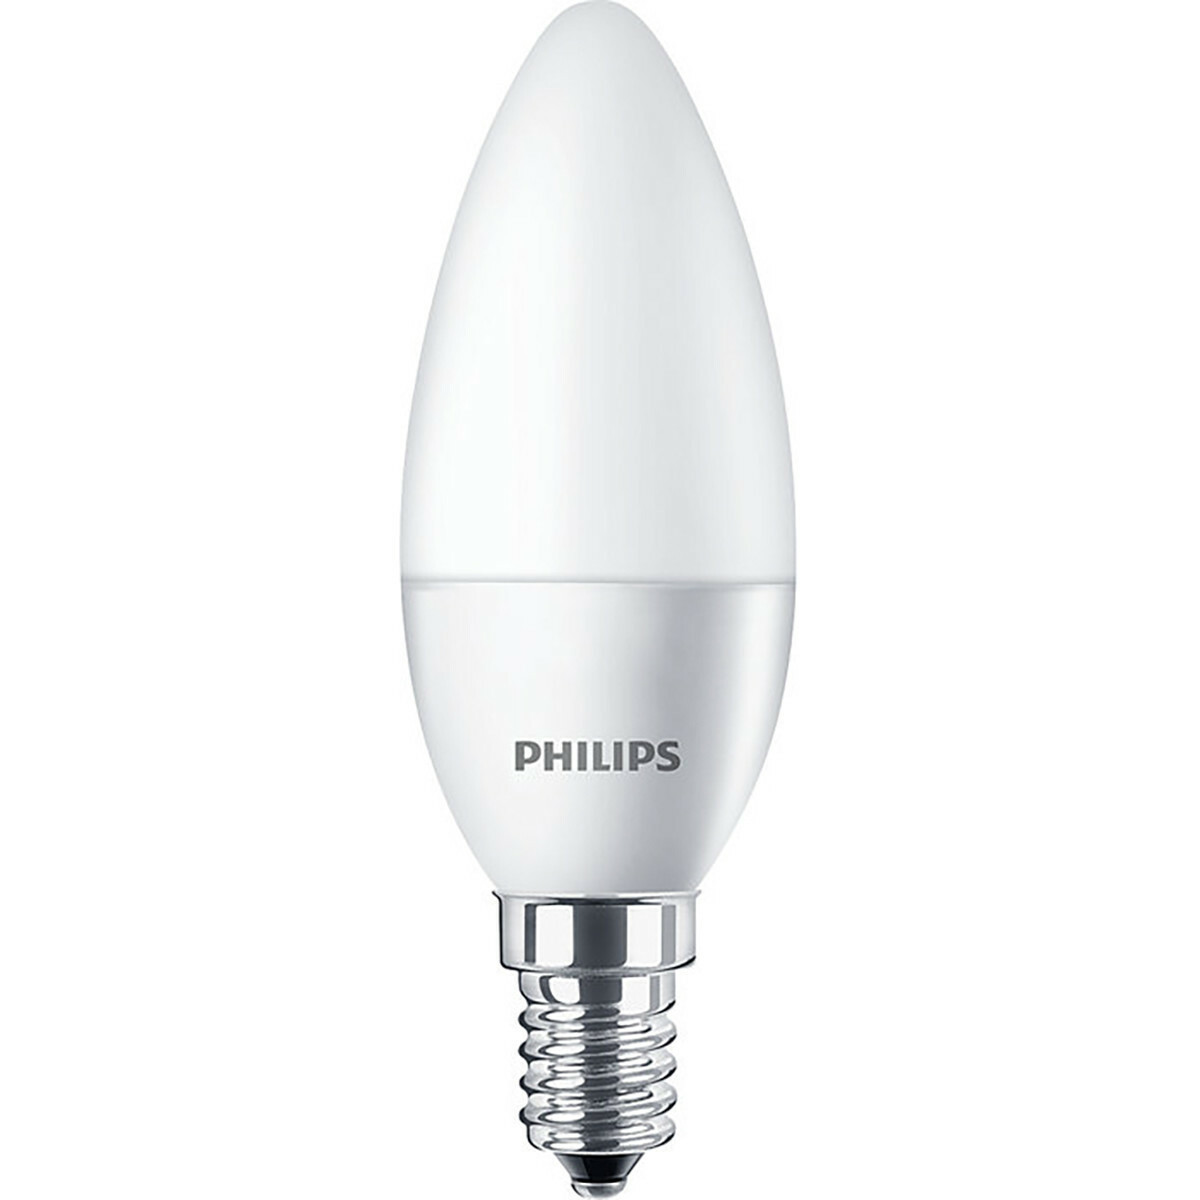 Rijden pijpleiding huren PHILIPS - LED Lamp - CorePro Candle 827 B35 FR - E14 Fitting - 5.5W - Warm  Wit 2700K | Vervangt 40W | BES LED